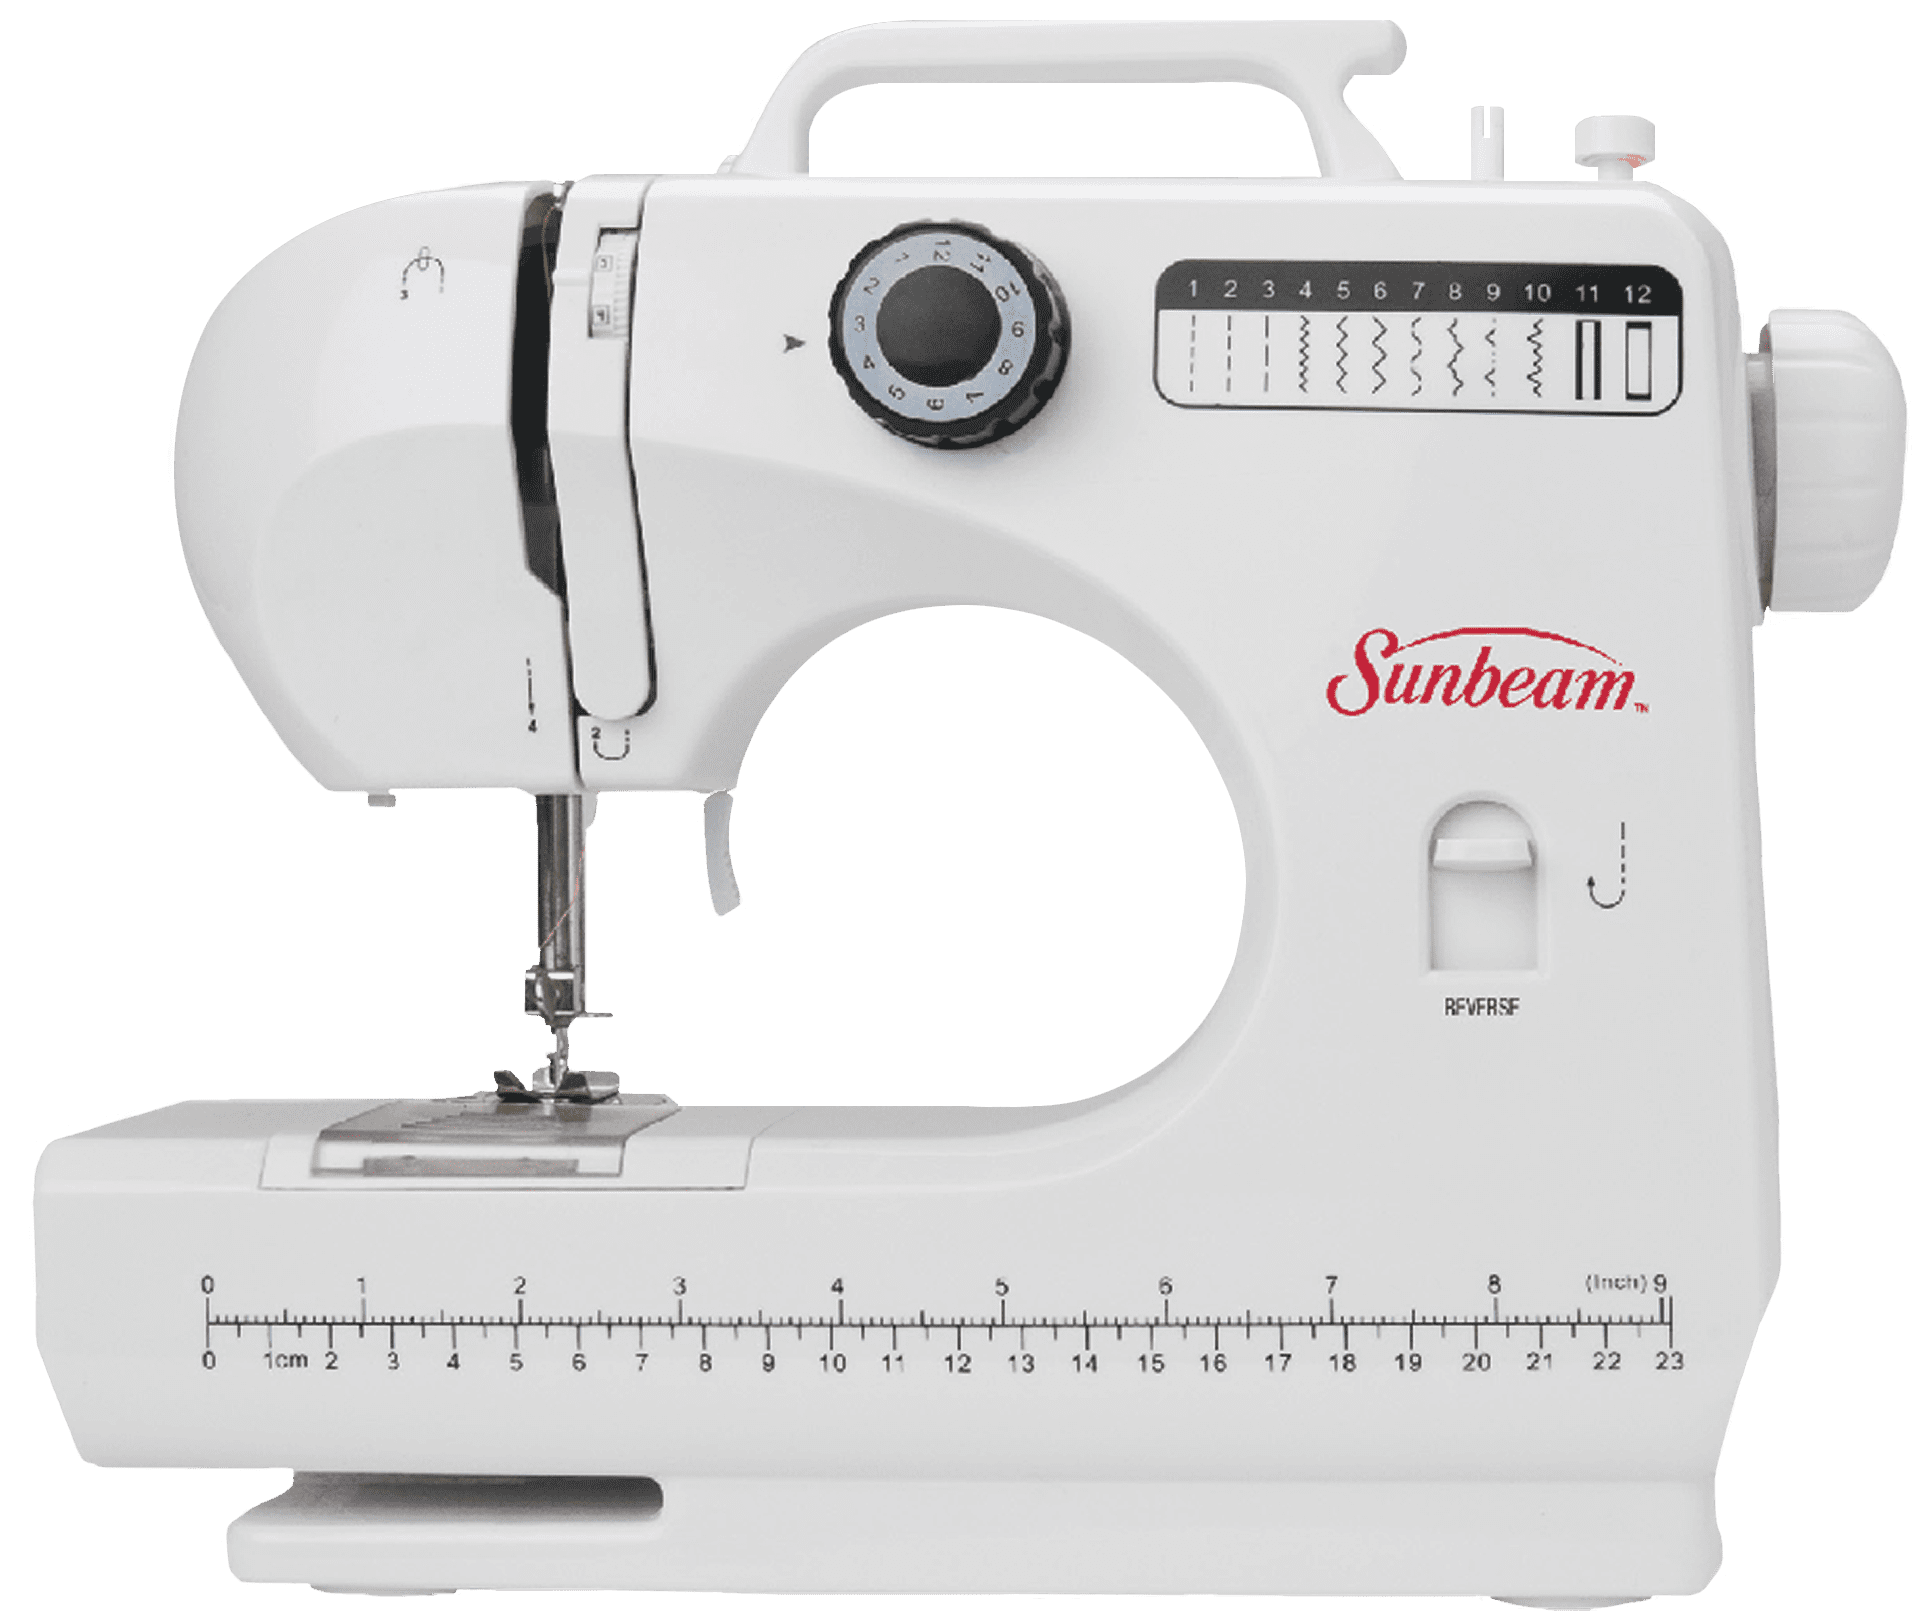 Sunbeam SB1818 Compact Sewing Machine and Sewing Kit - Walmart.com